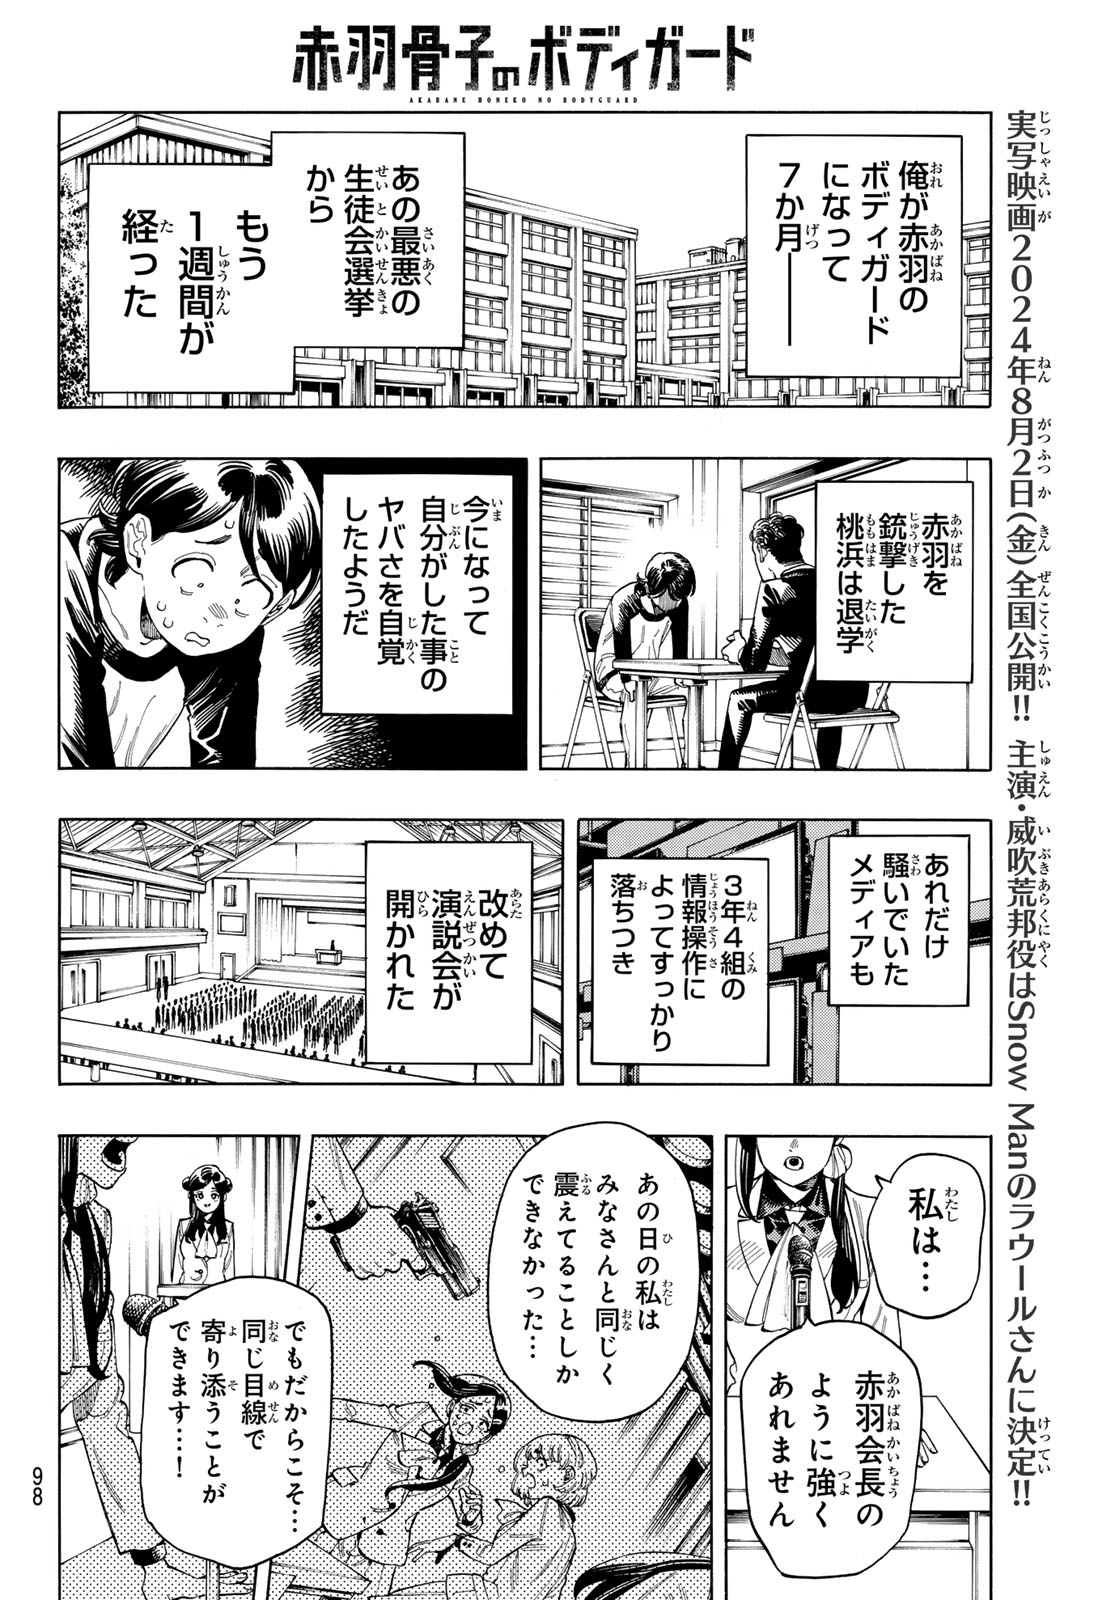 Akabane Honeko no Bodyguard - Chapter 81 - Page 4